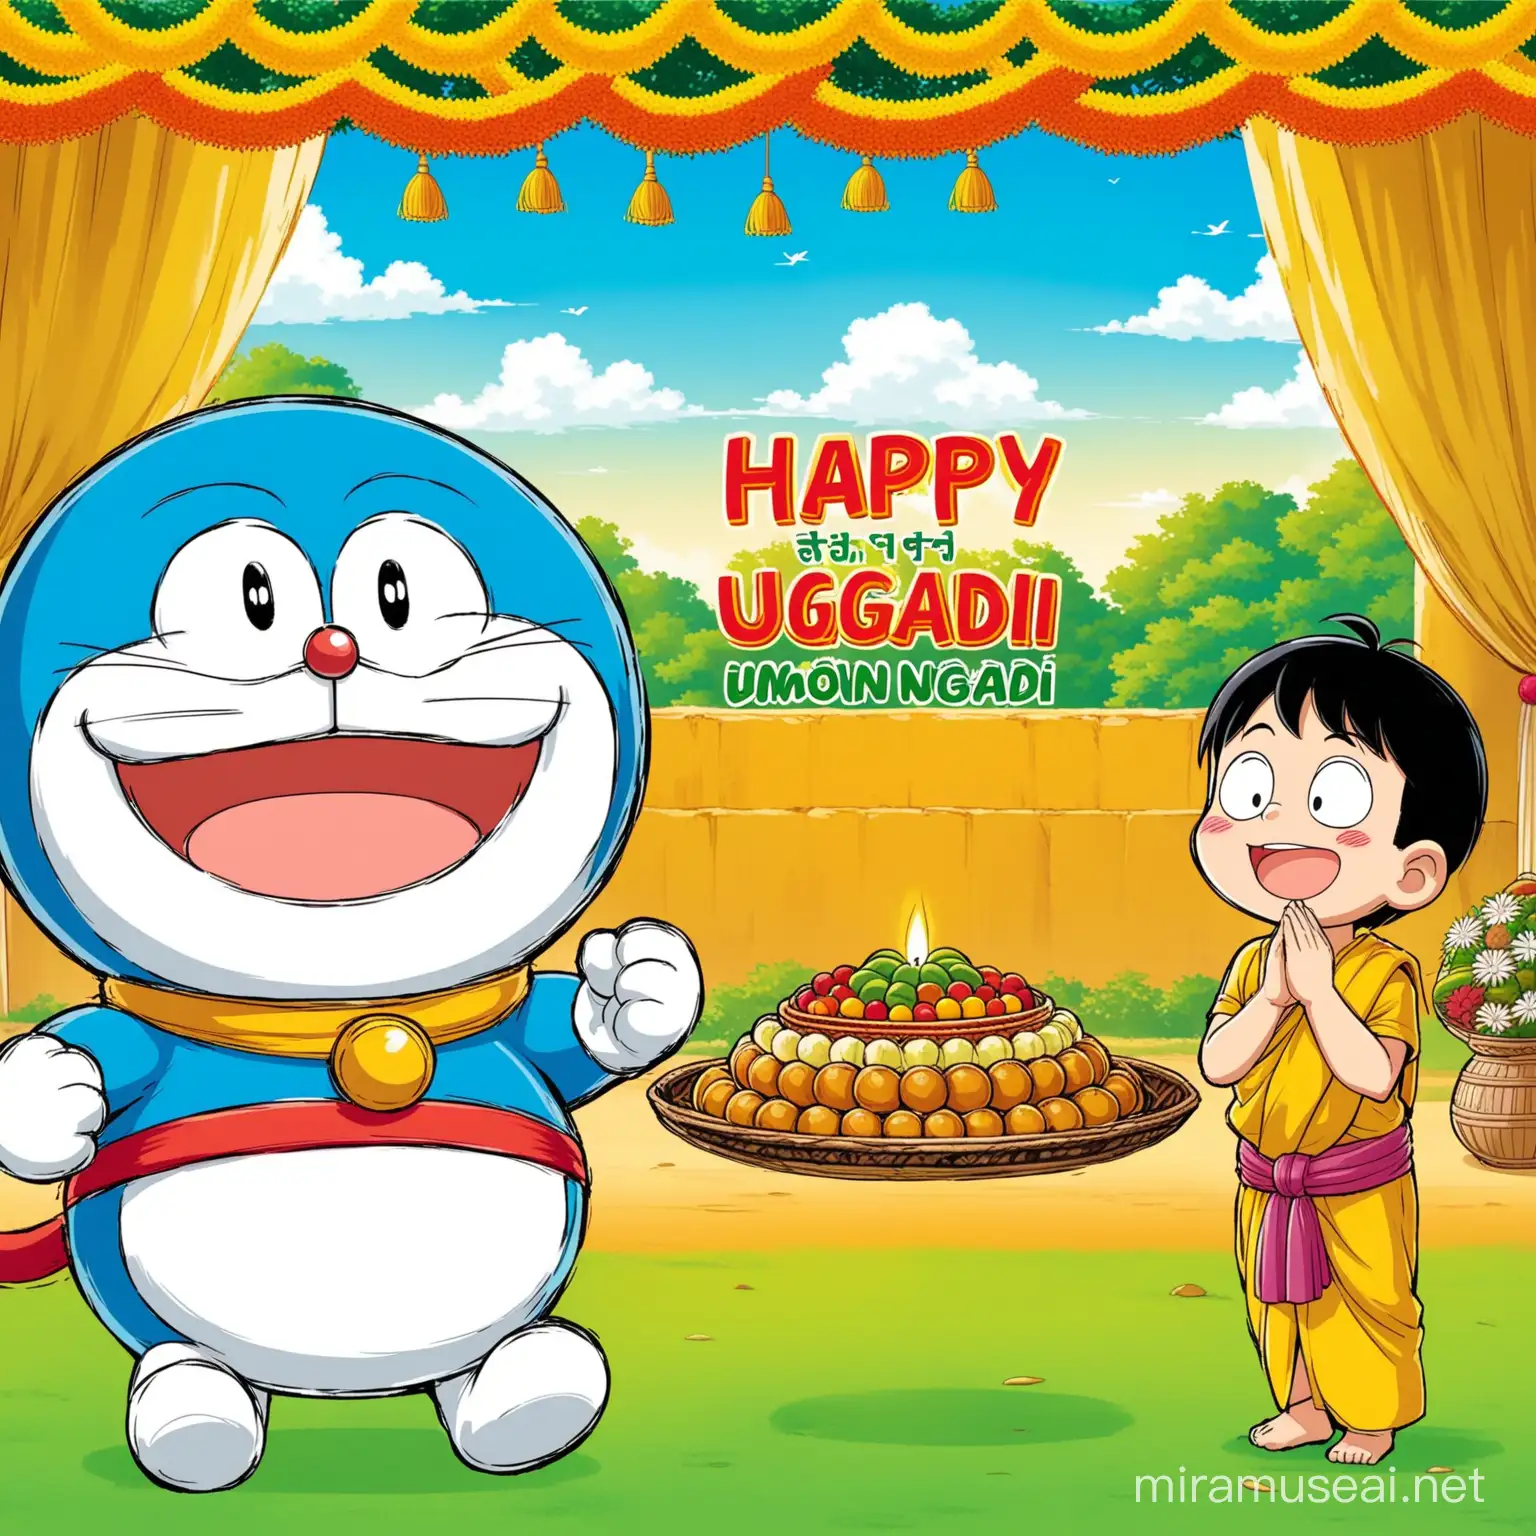 Doraemon with cute nobita saying "happy ugadi mohan "